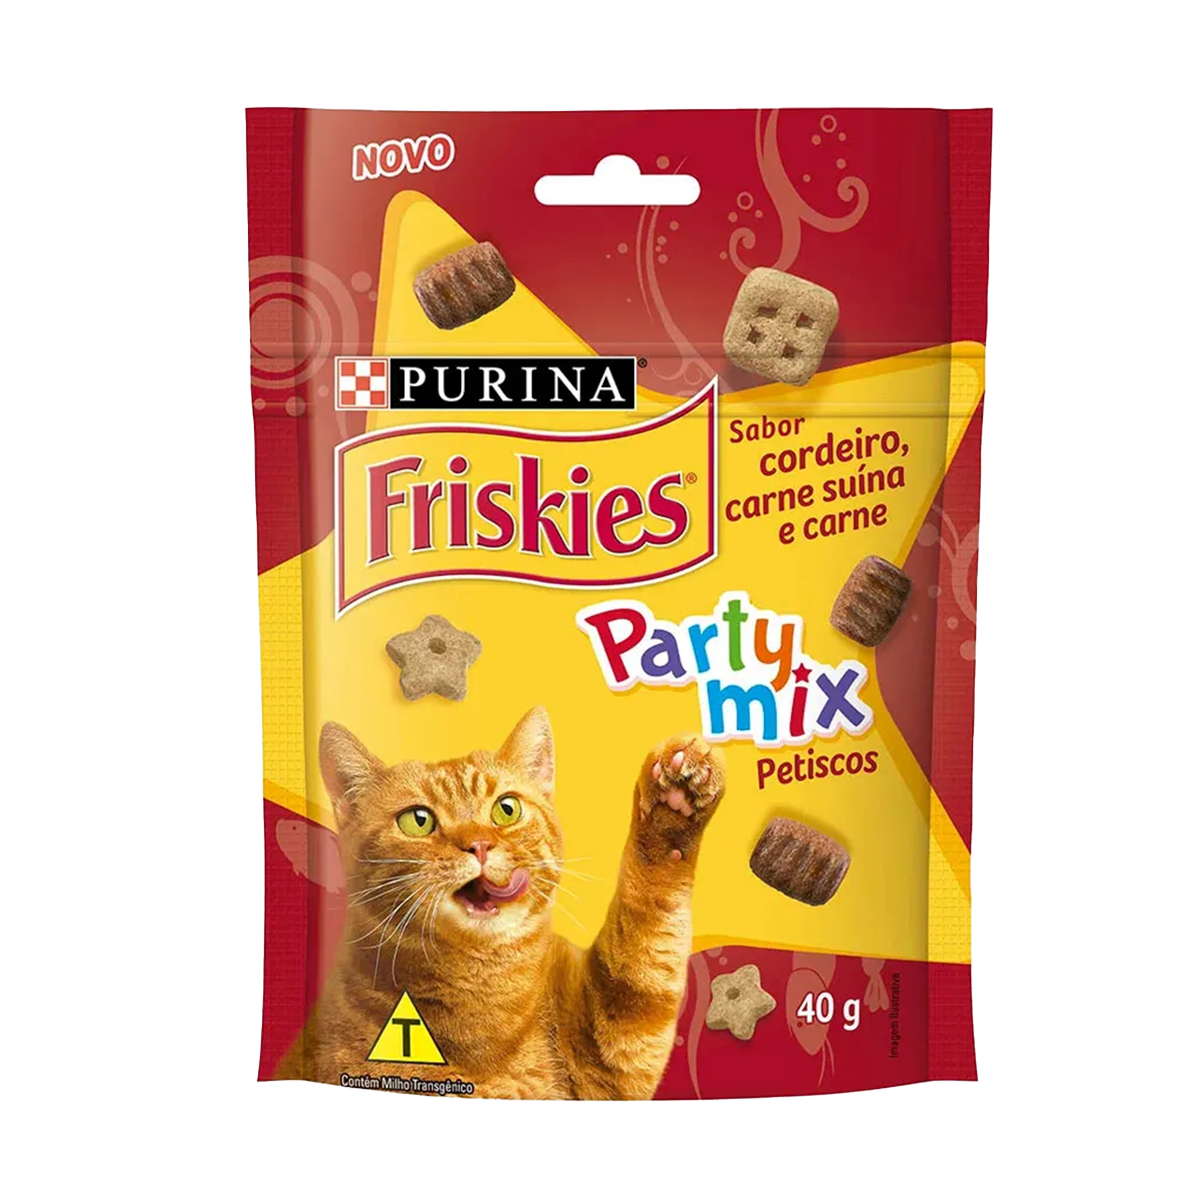 Purina-Friskies-snacks-cordeiro-carne.png